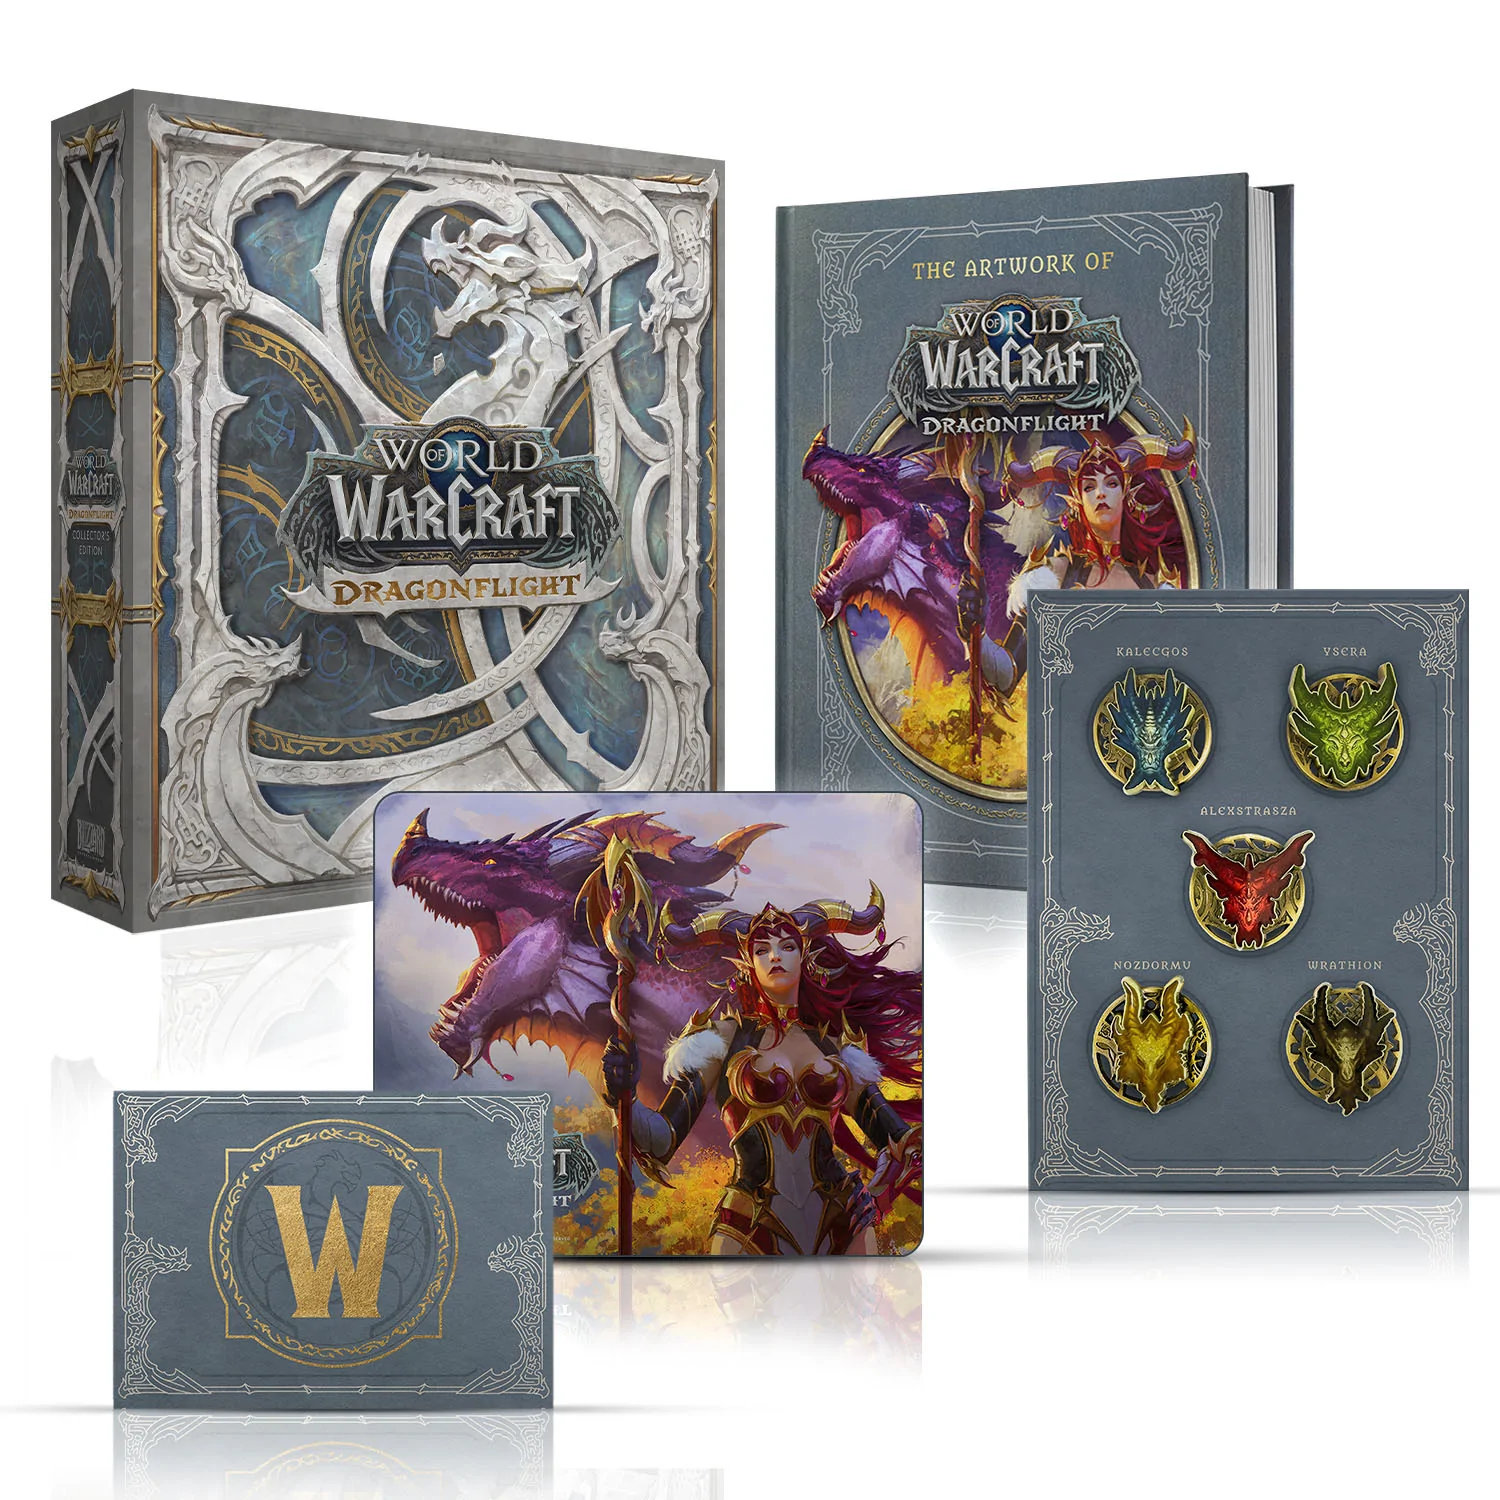 World of Warcraft Brasil - BarraDois